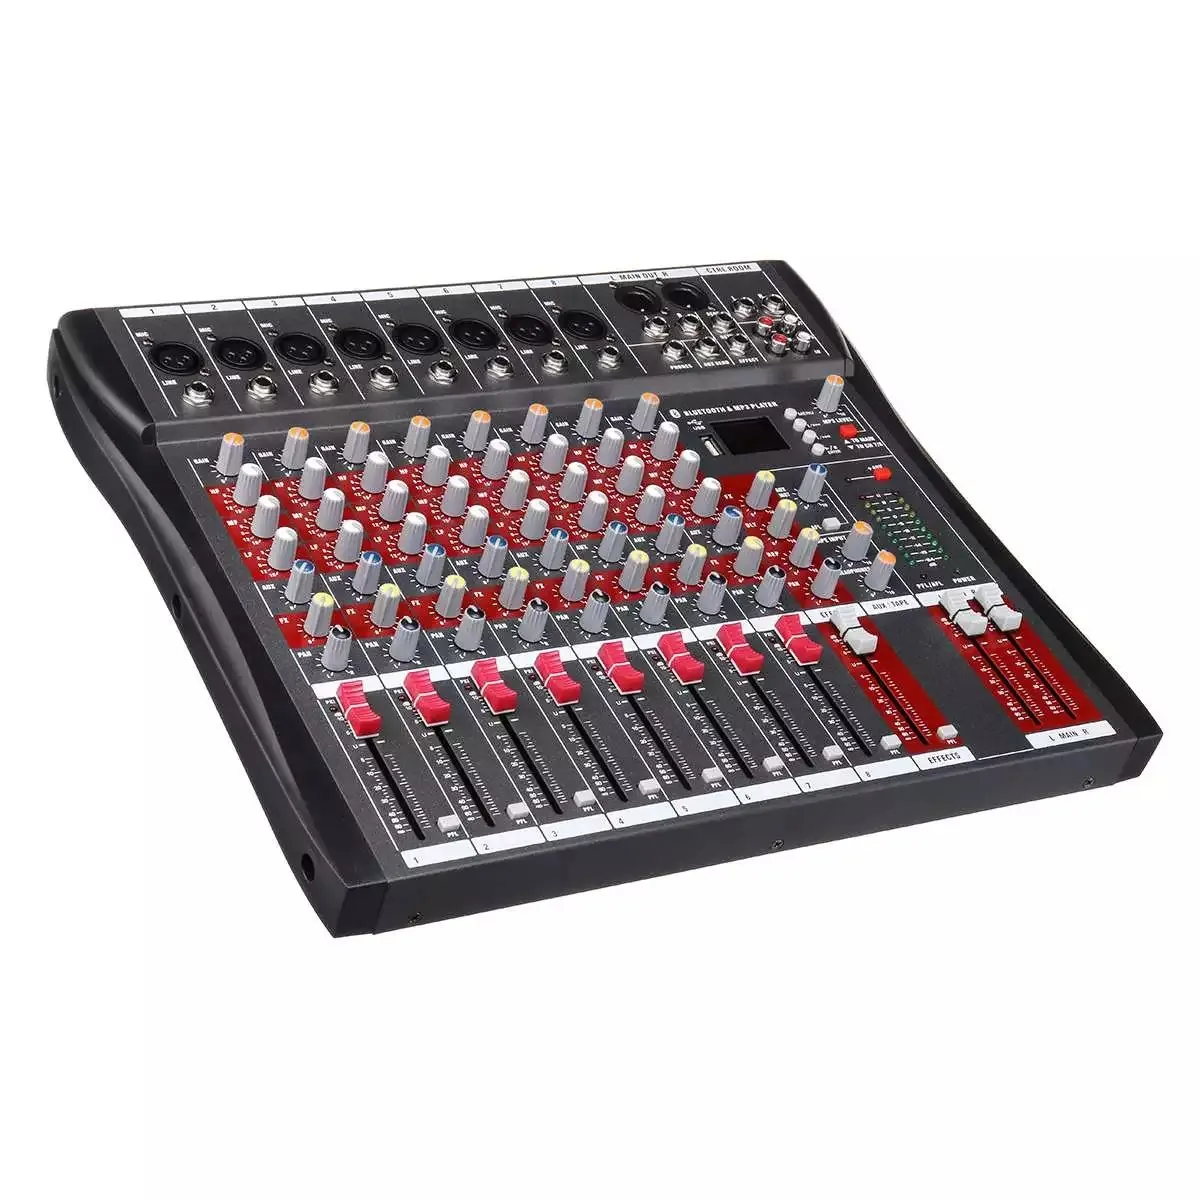 Harga Langsung dari Pabrik Mixpad Mixer Audio Versi Penuh Gratis Unduh Konsol Mixing Retak Papan 8ch Profesional